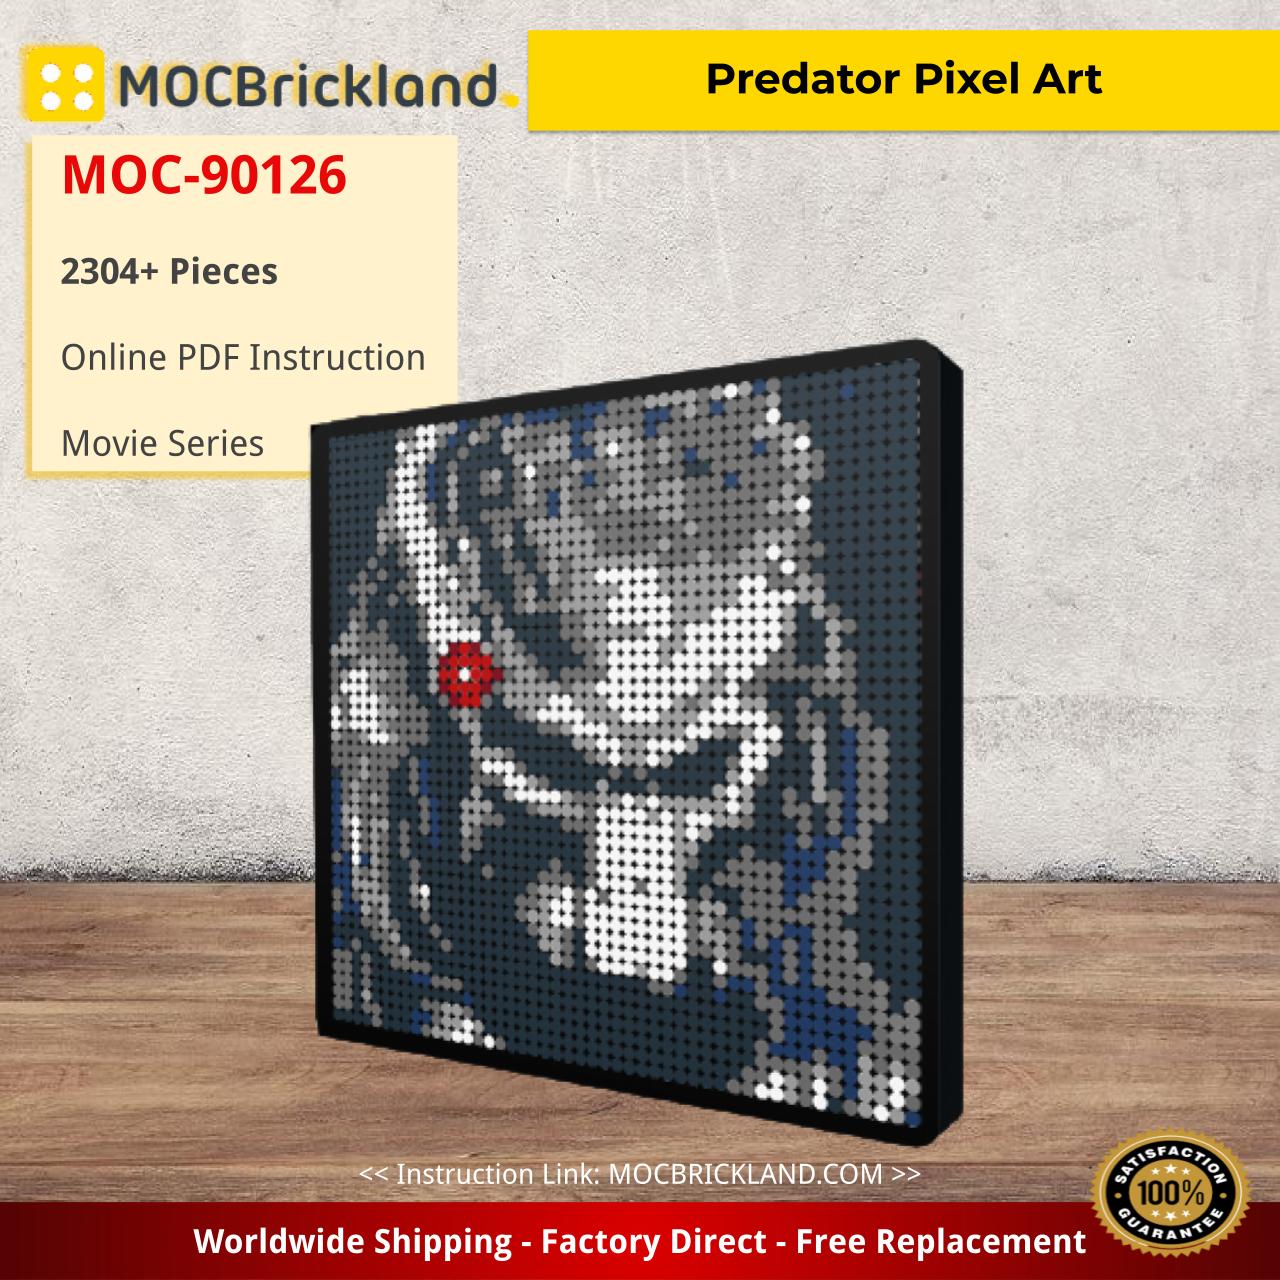 Predator Pixel Art Movie MOC-90126 with 2304 pieces